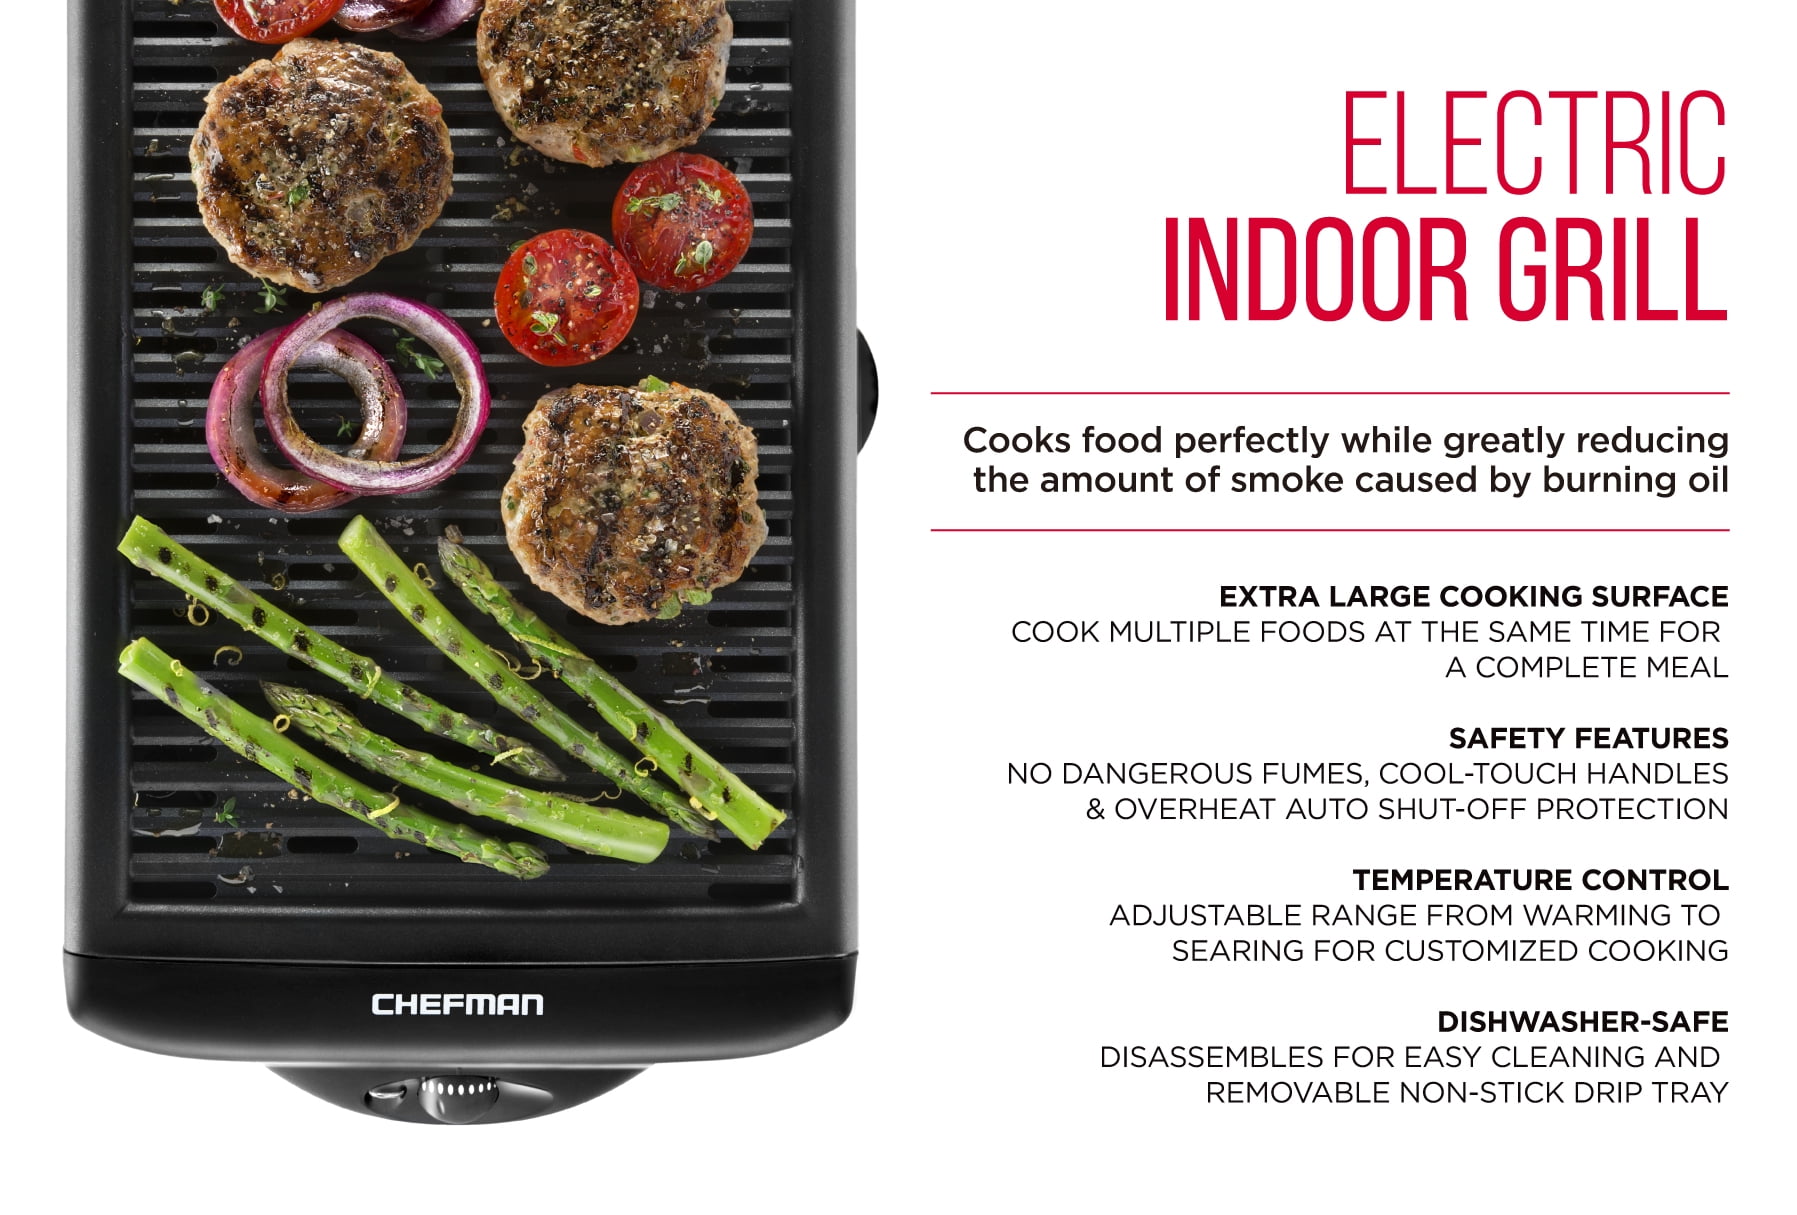 Chefman Smokeless Indoor Electric Grill, Adjustable Temperature Control, Dishwasher-Safe Parts